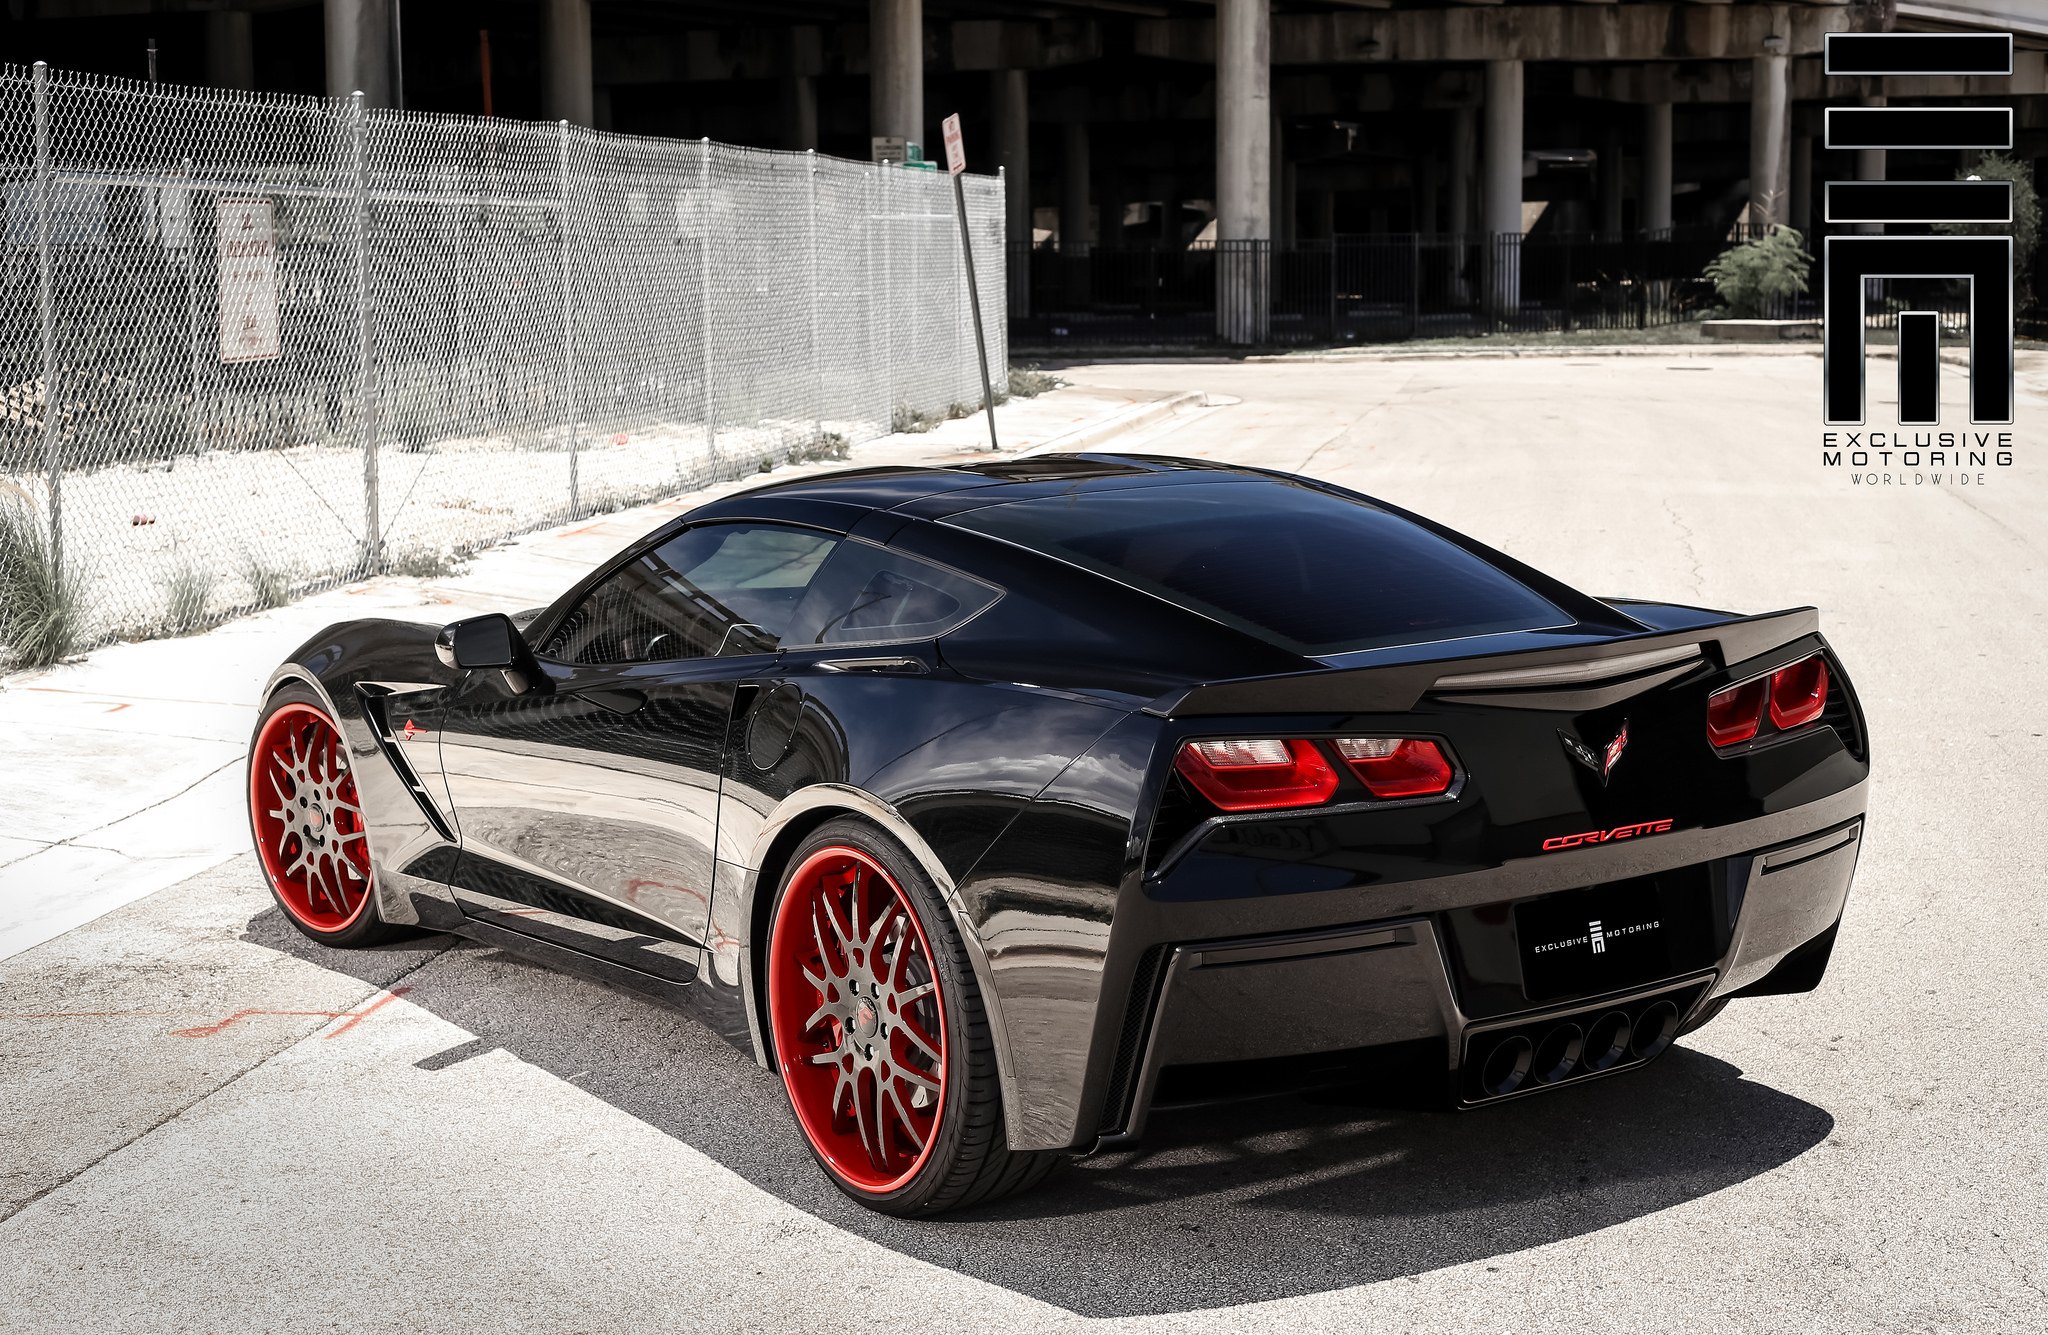 Black on black Corvette C7 rear view - Photo by Exclusive Motoring